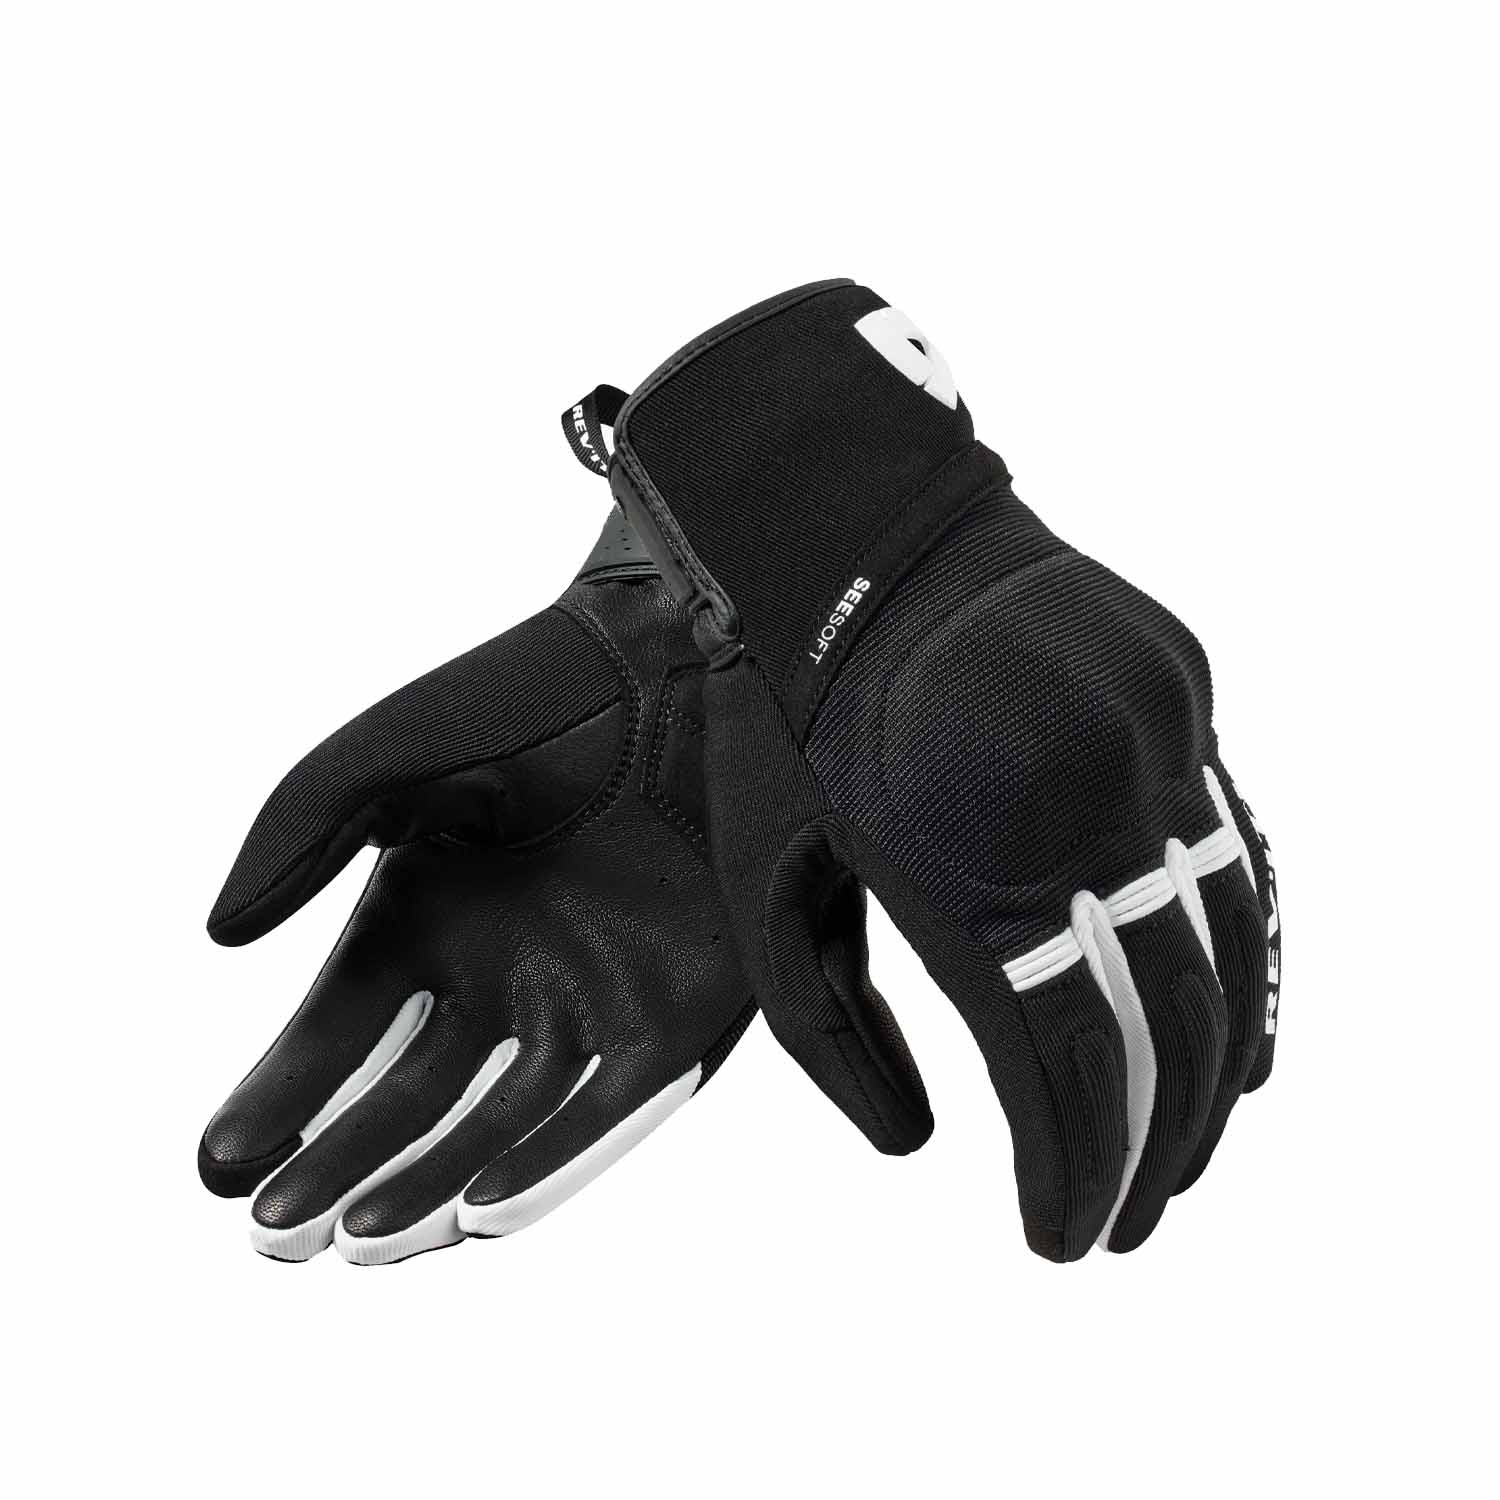 Image of REV'IT! Mosca 2 Gloves Black White Talla S